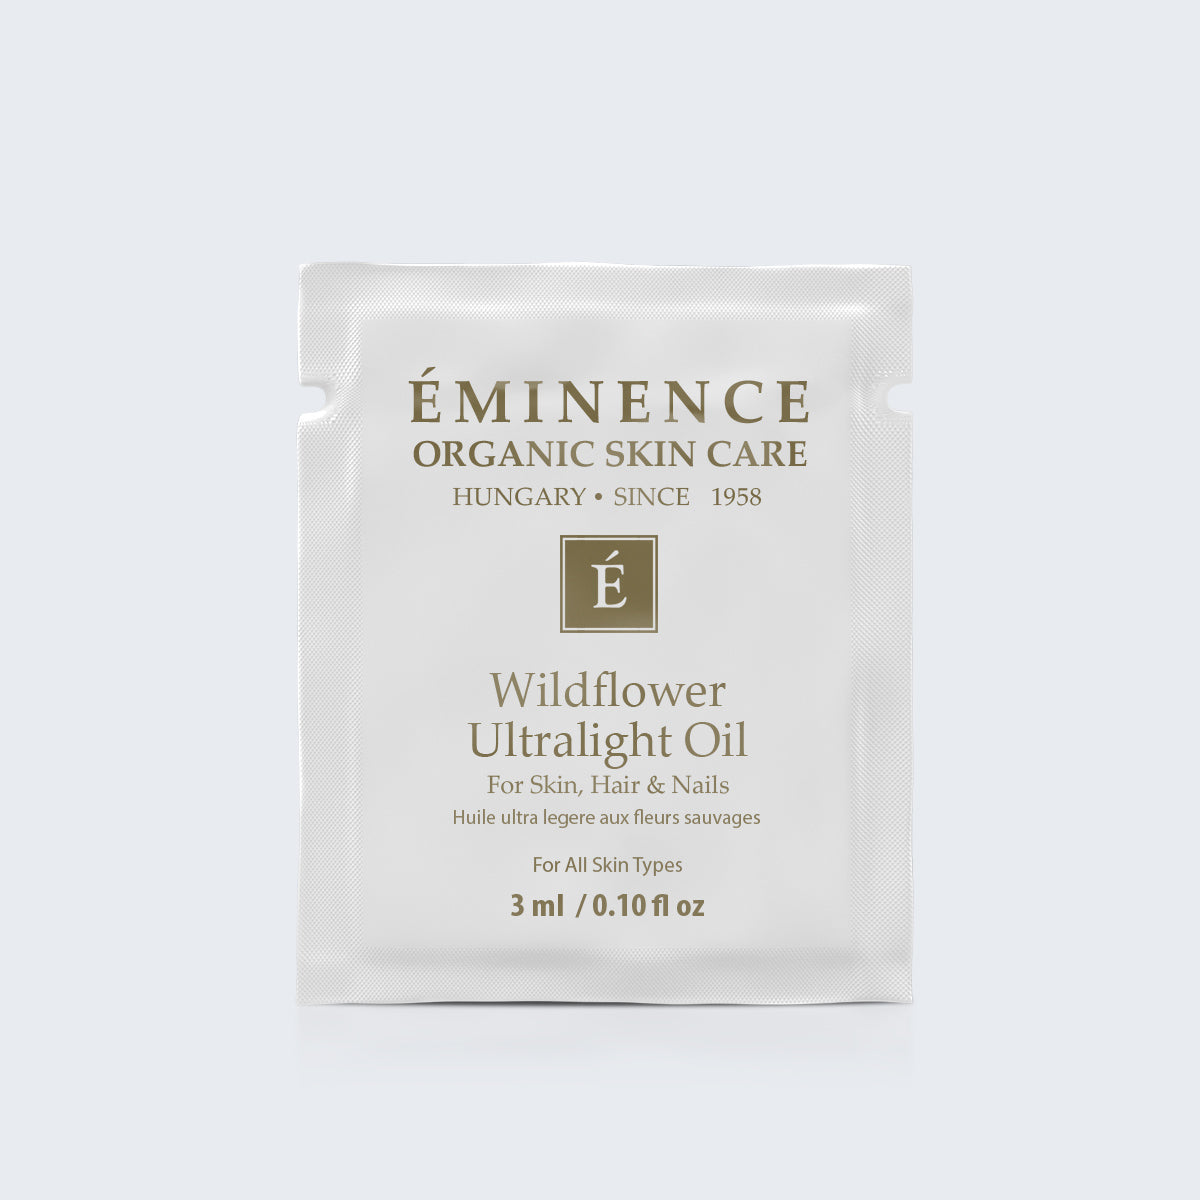 Eminence Organics Wildflower Ultralight Oil Card Sample